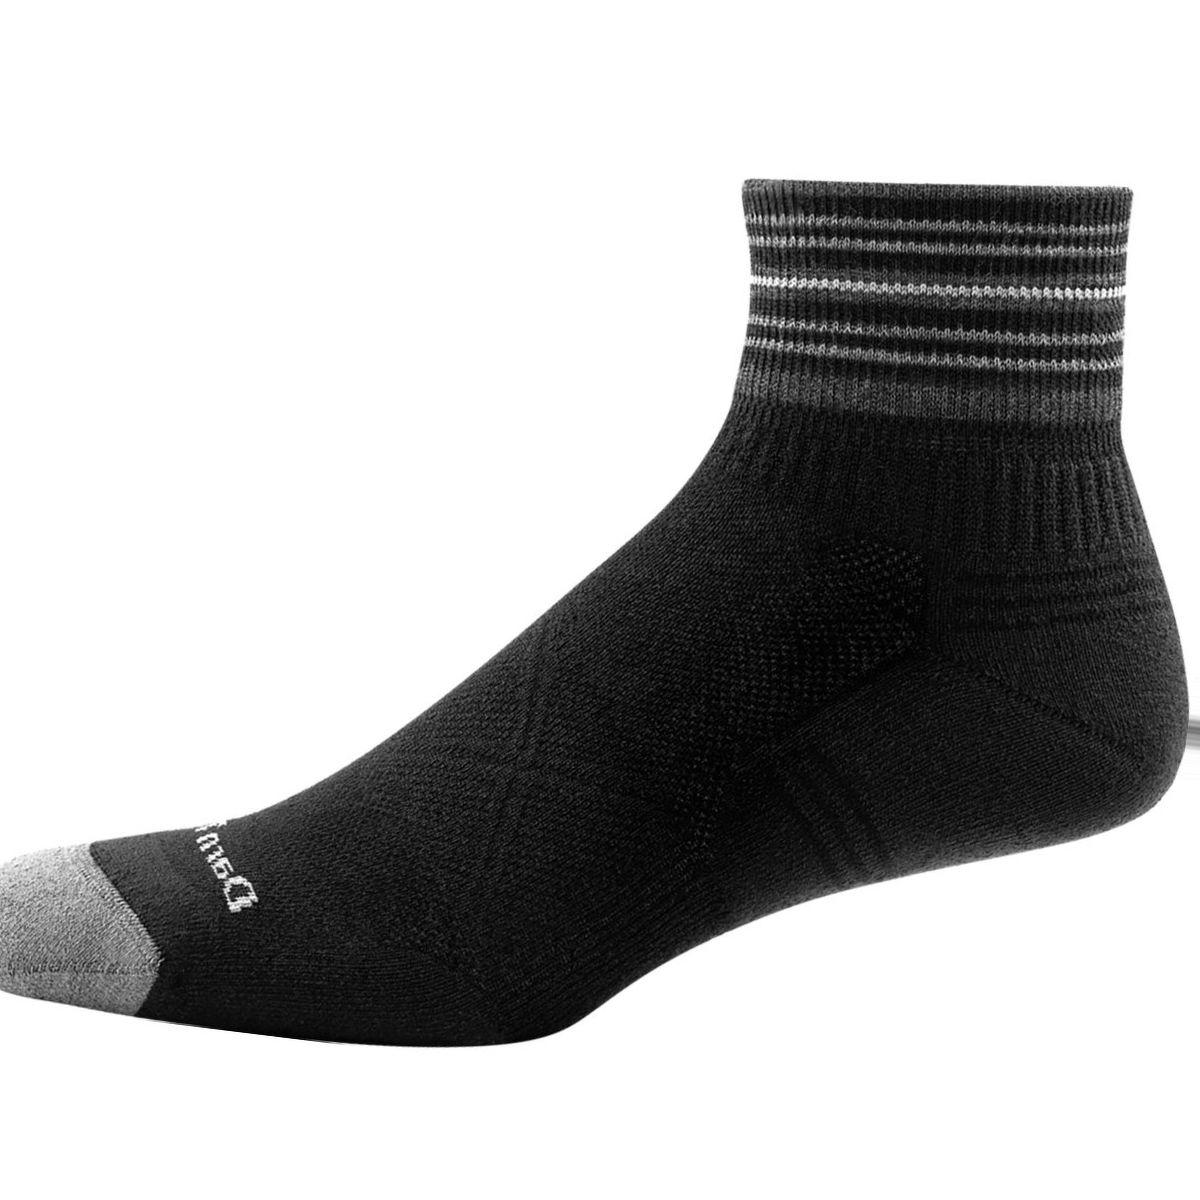 Darn Tough Vertex 1/4 UL Cool Max Running Sock - Men's